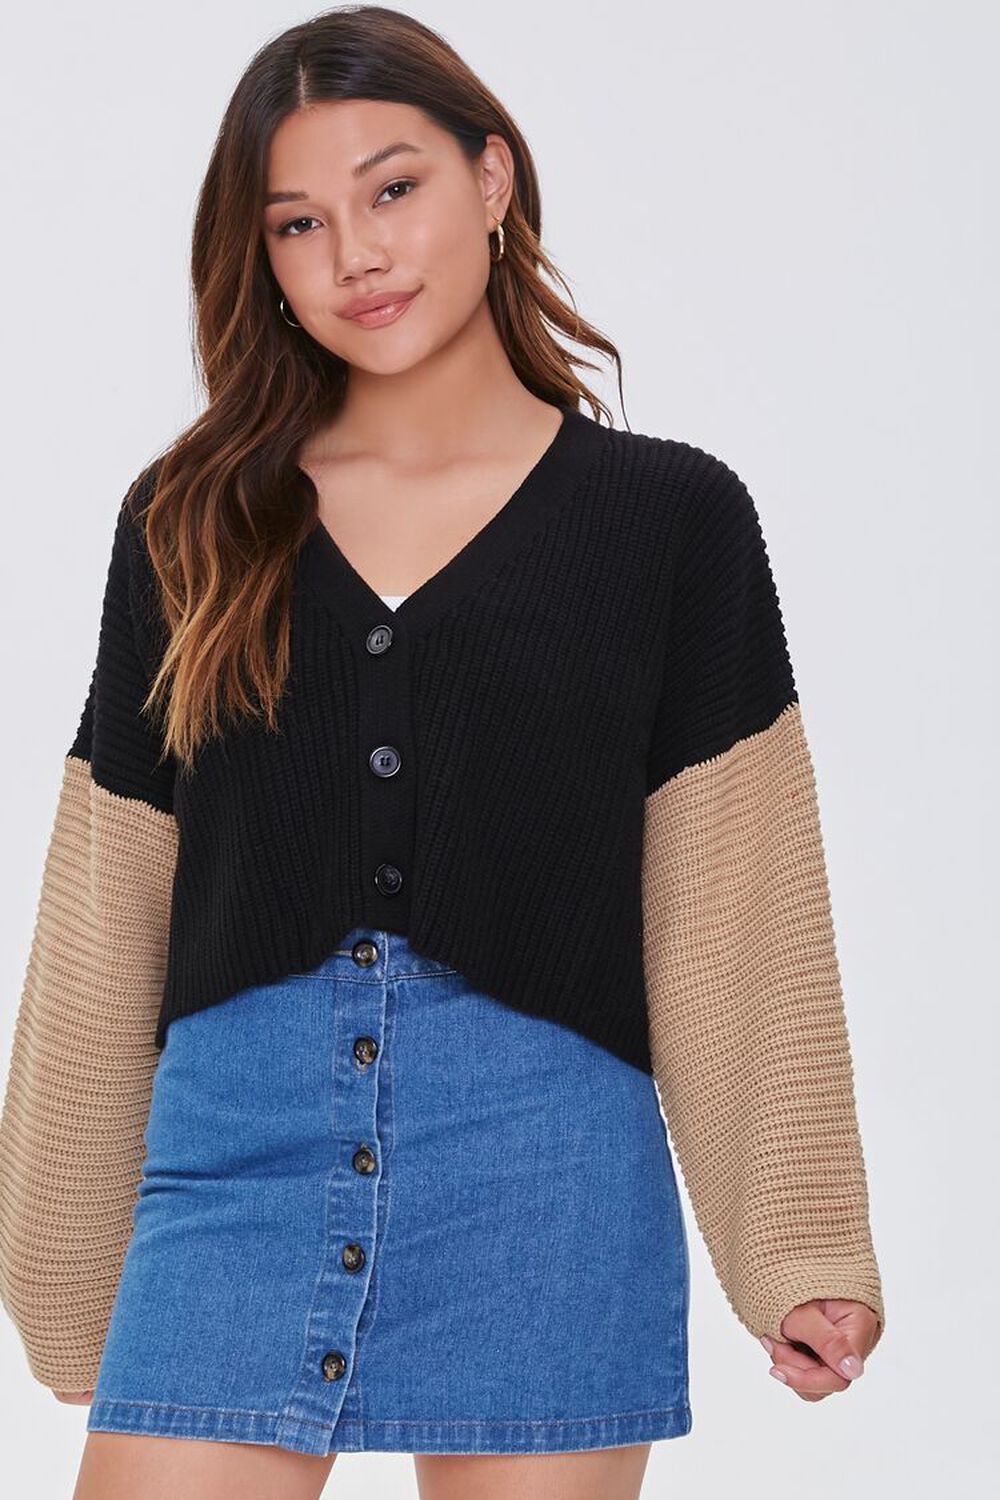 Colorblock Cardigan Sweater, image 1